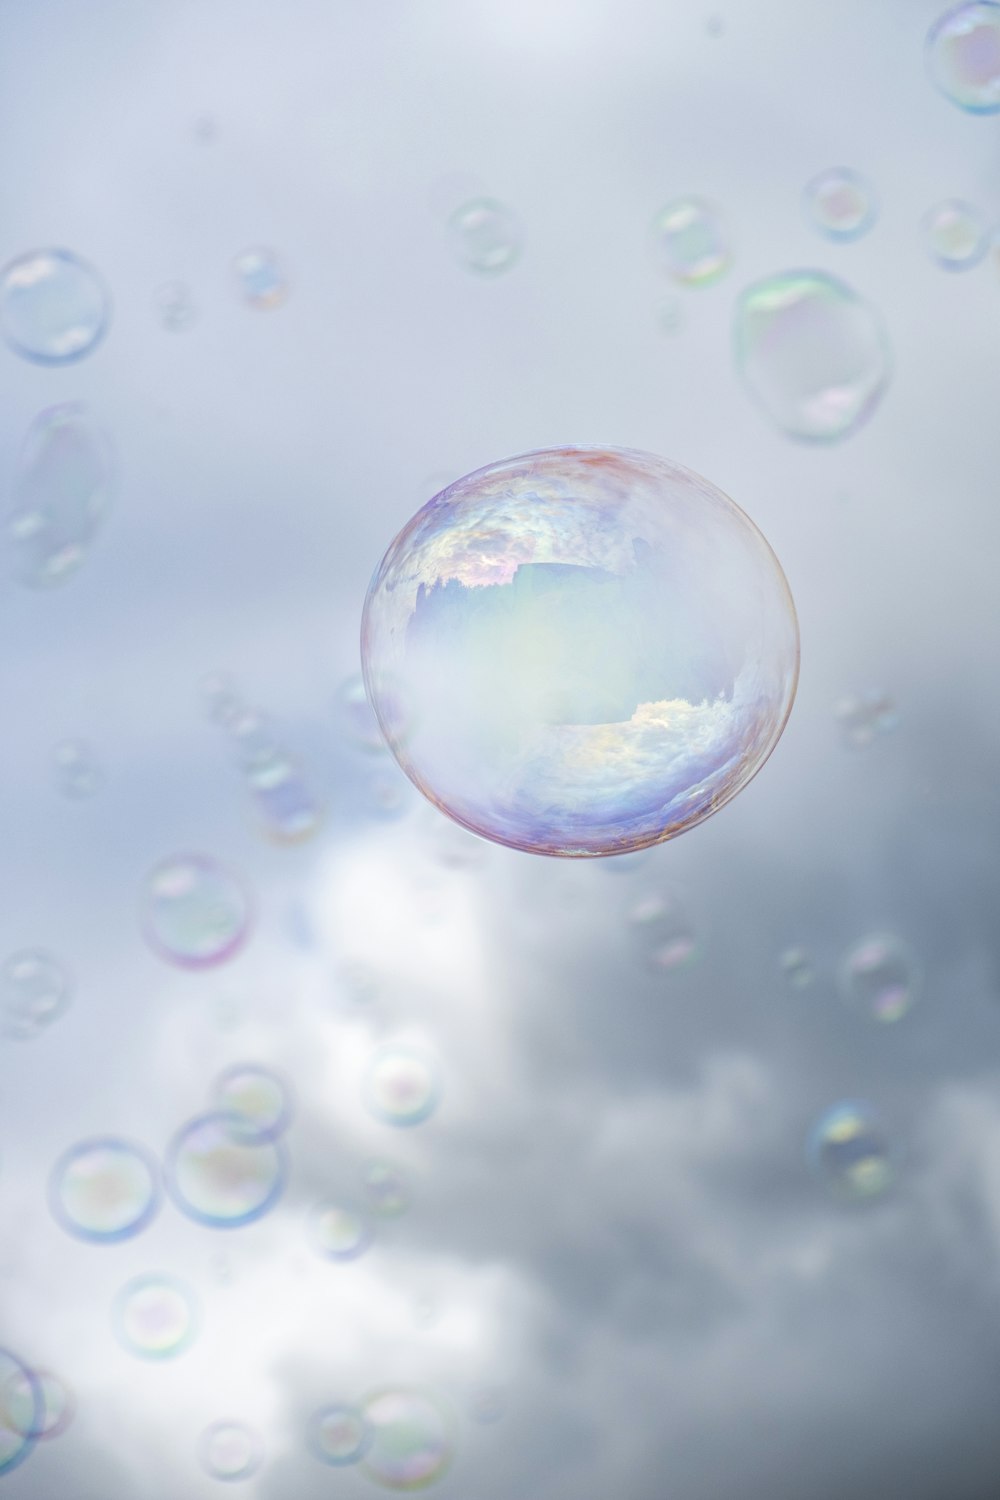 Best 500+ Bubble Pictures | Download Free Images on Unsplash